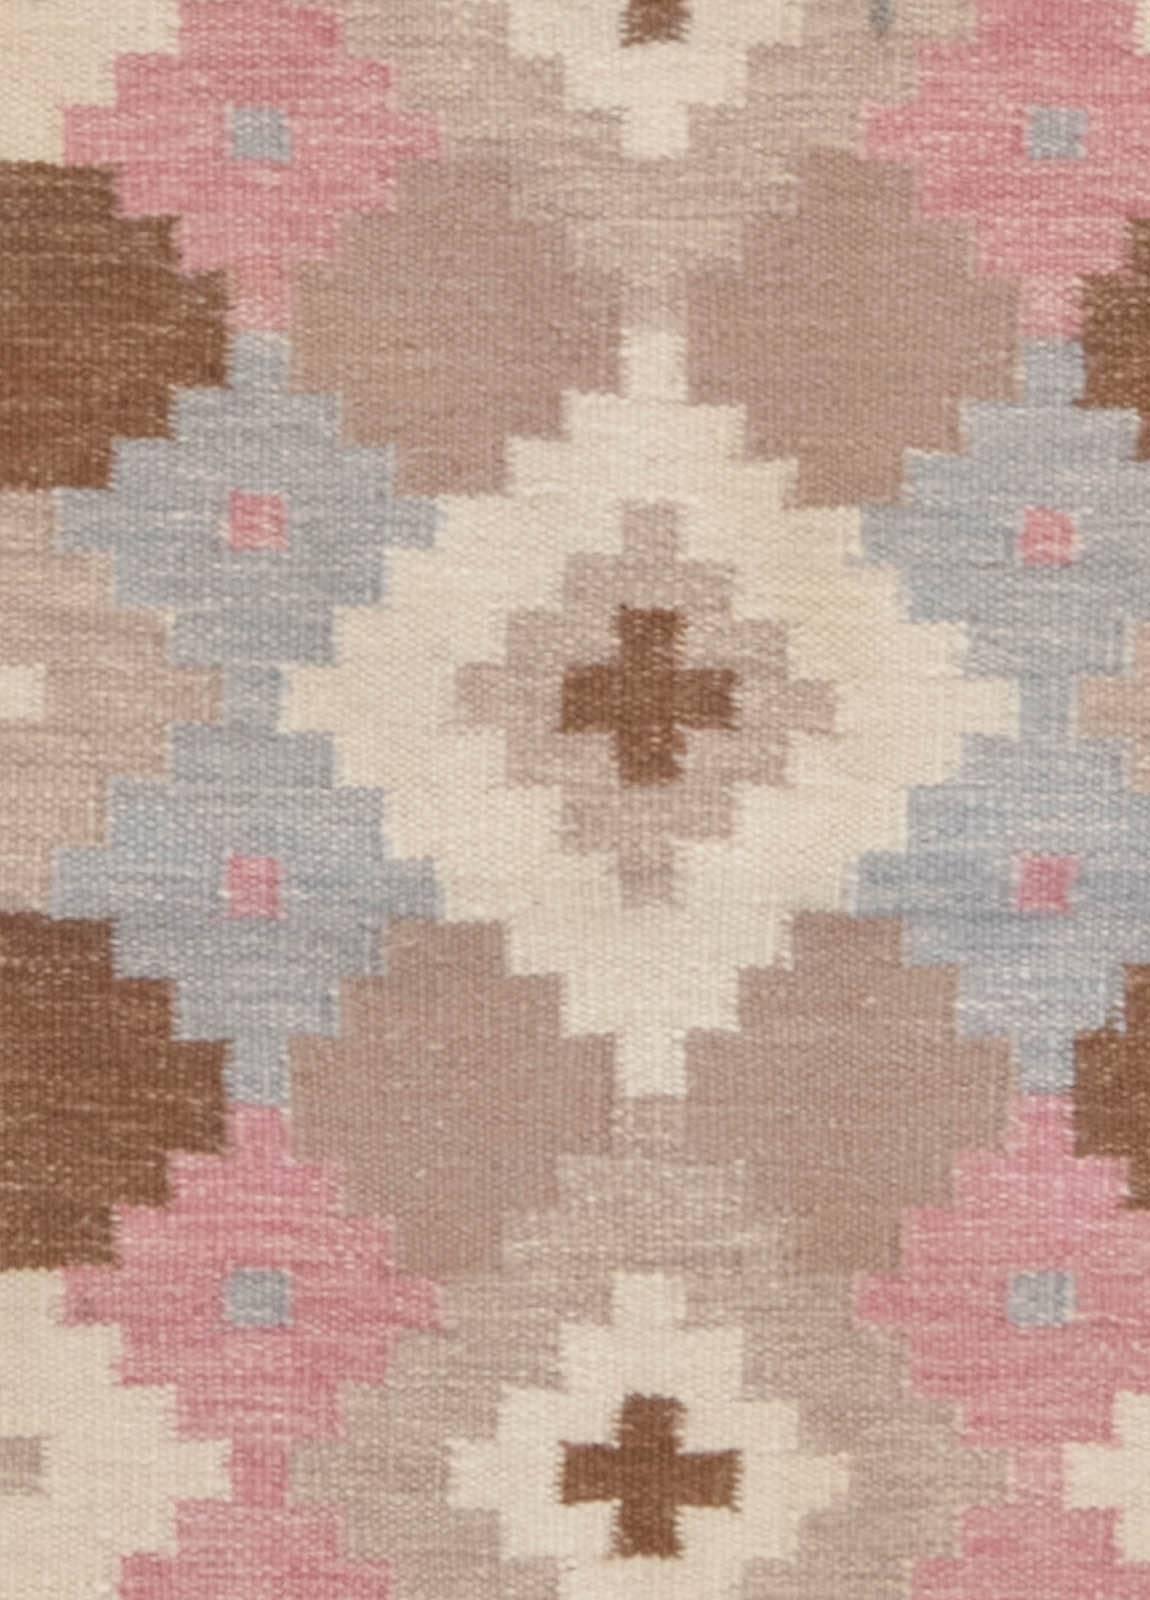 Mid-20th century Swedish beige, pink, brown and gray flat-weave wool rug by Doris Leslie Blau
Size: 5'6